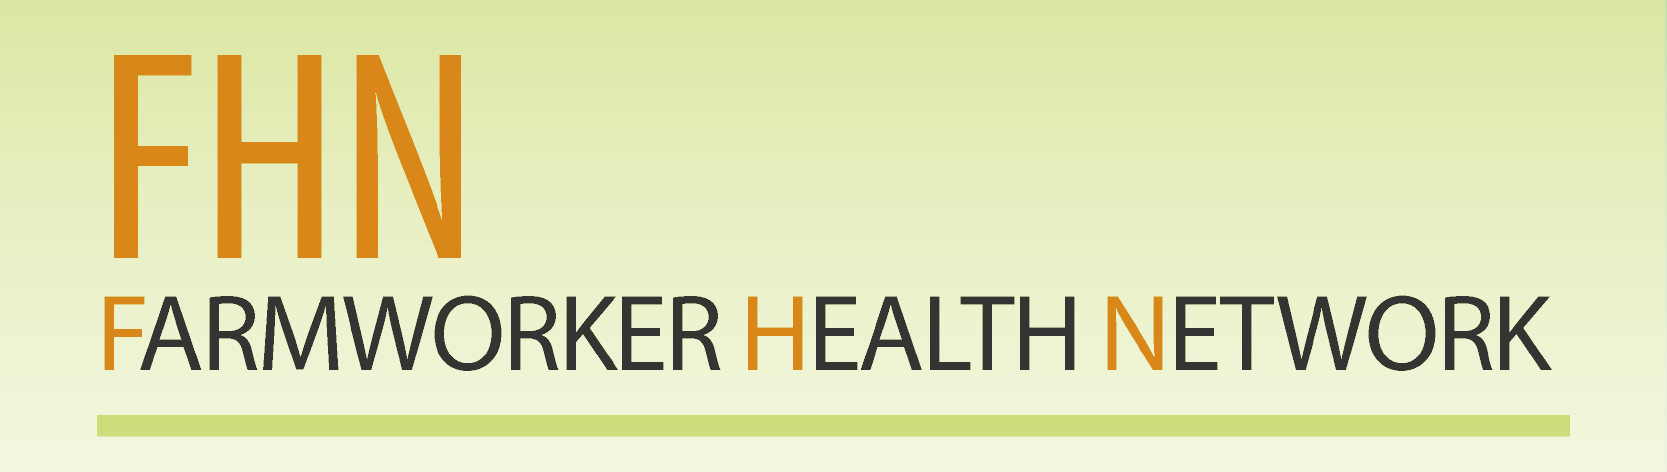 Farmworker Health Network